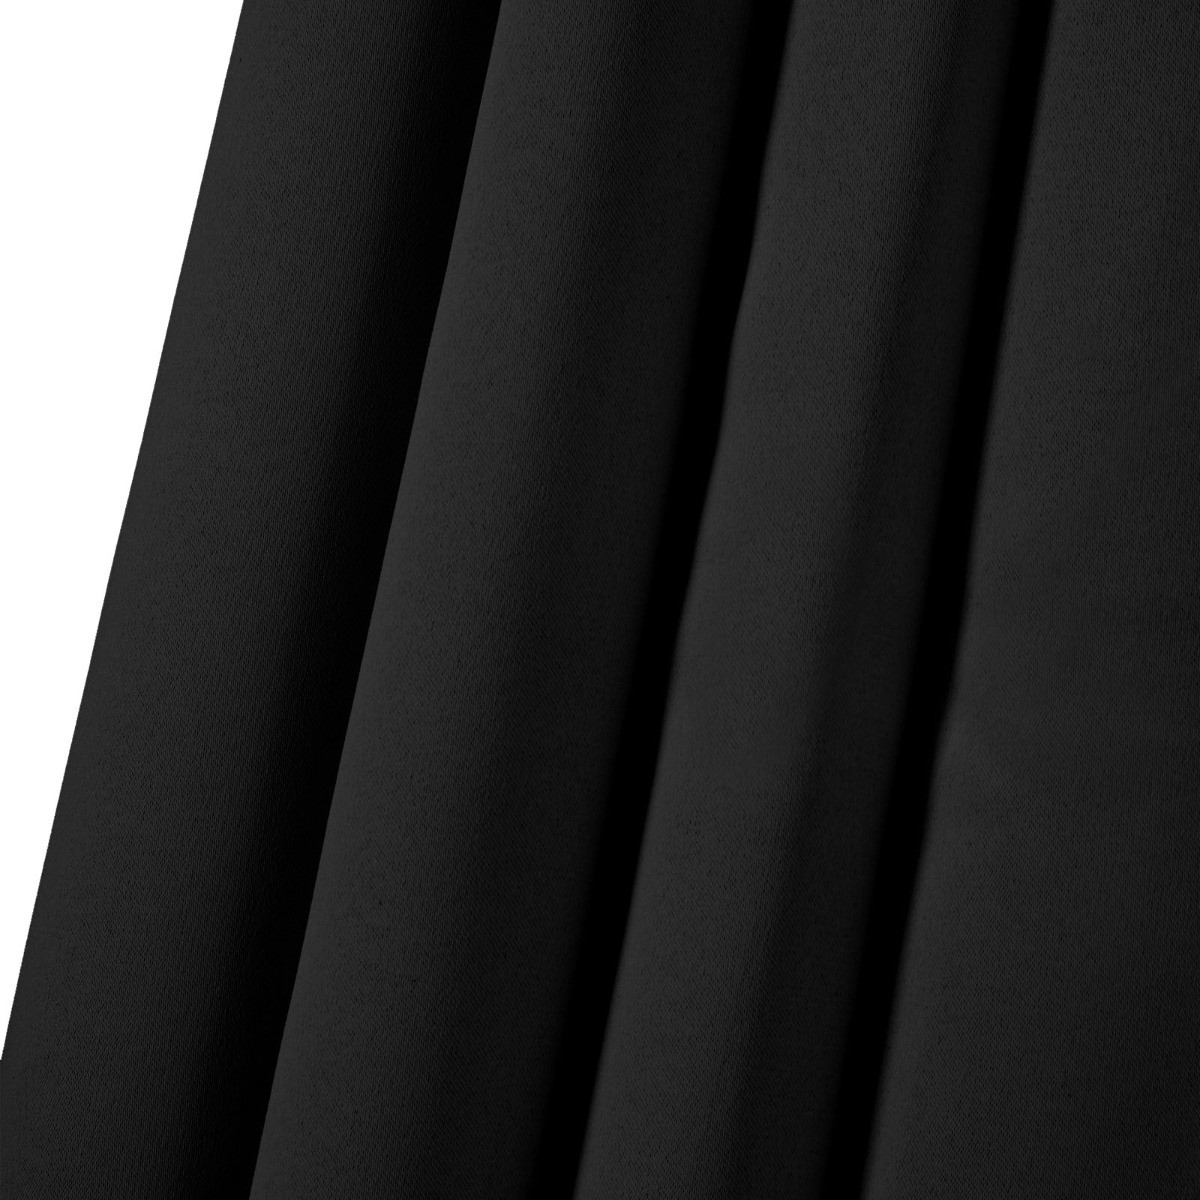 Dreamscene Pencil Pleat 1 Thermal Door Curtain Panel - Black, 66" x 84">